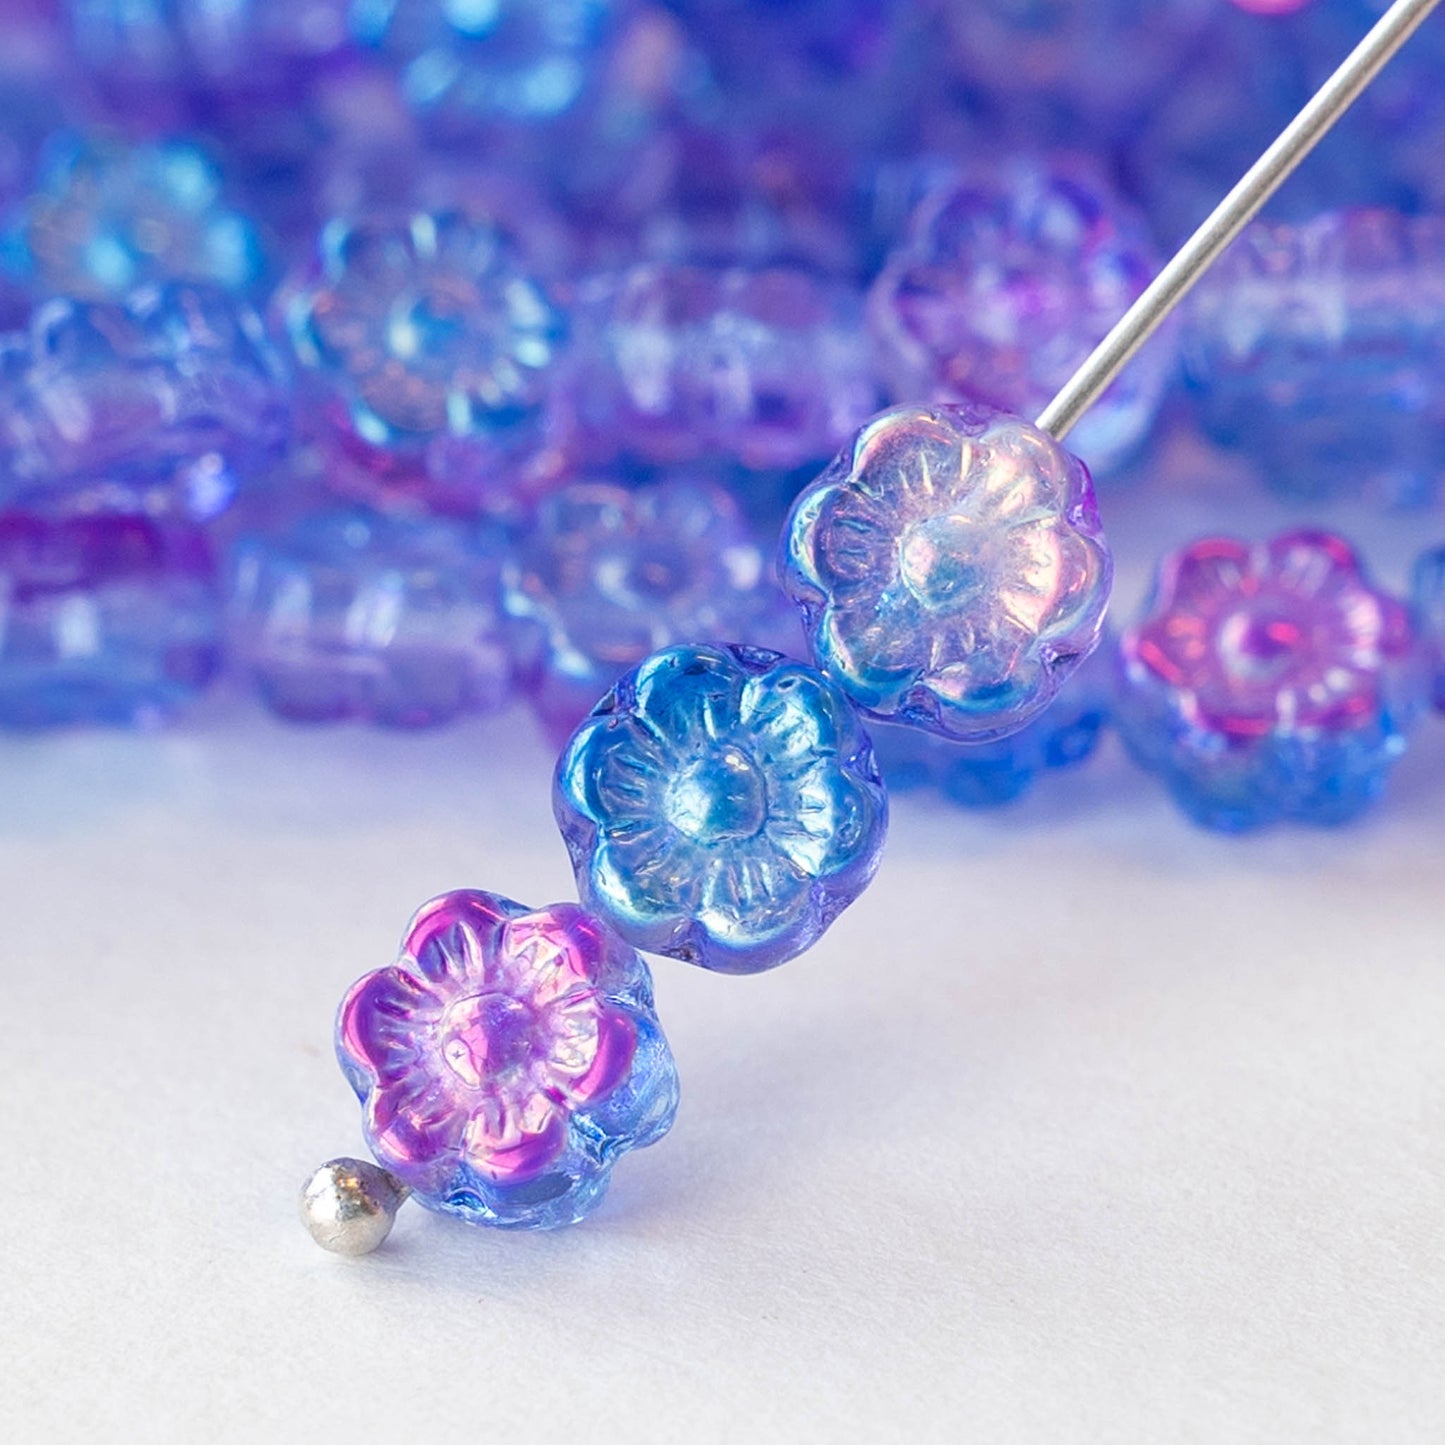 6mm Glass Flower Beads - Blue Purple AB - 30 beads